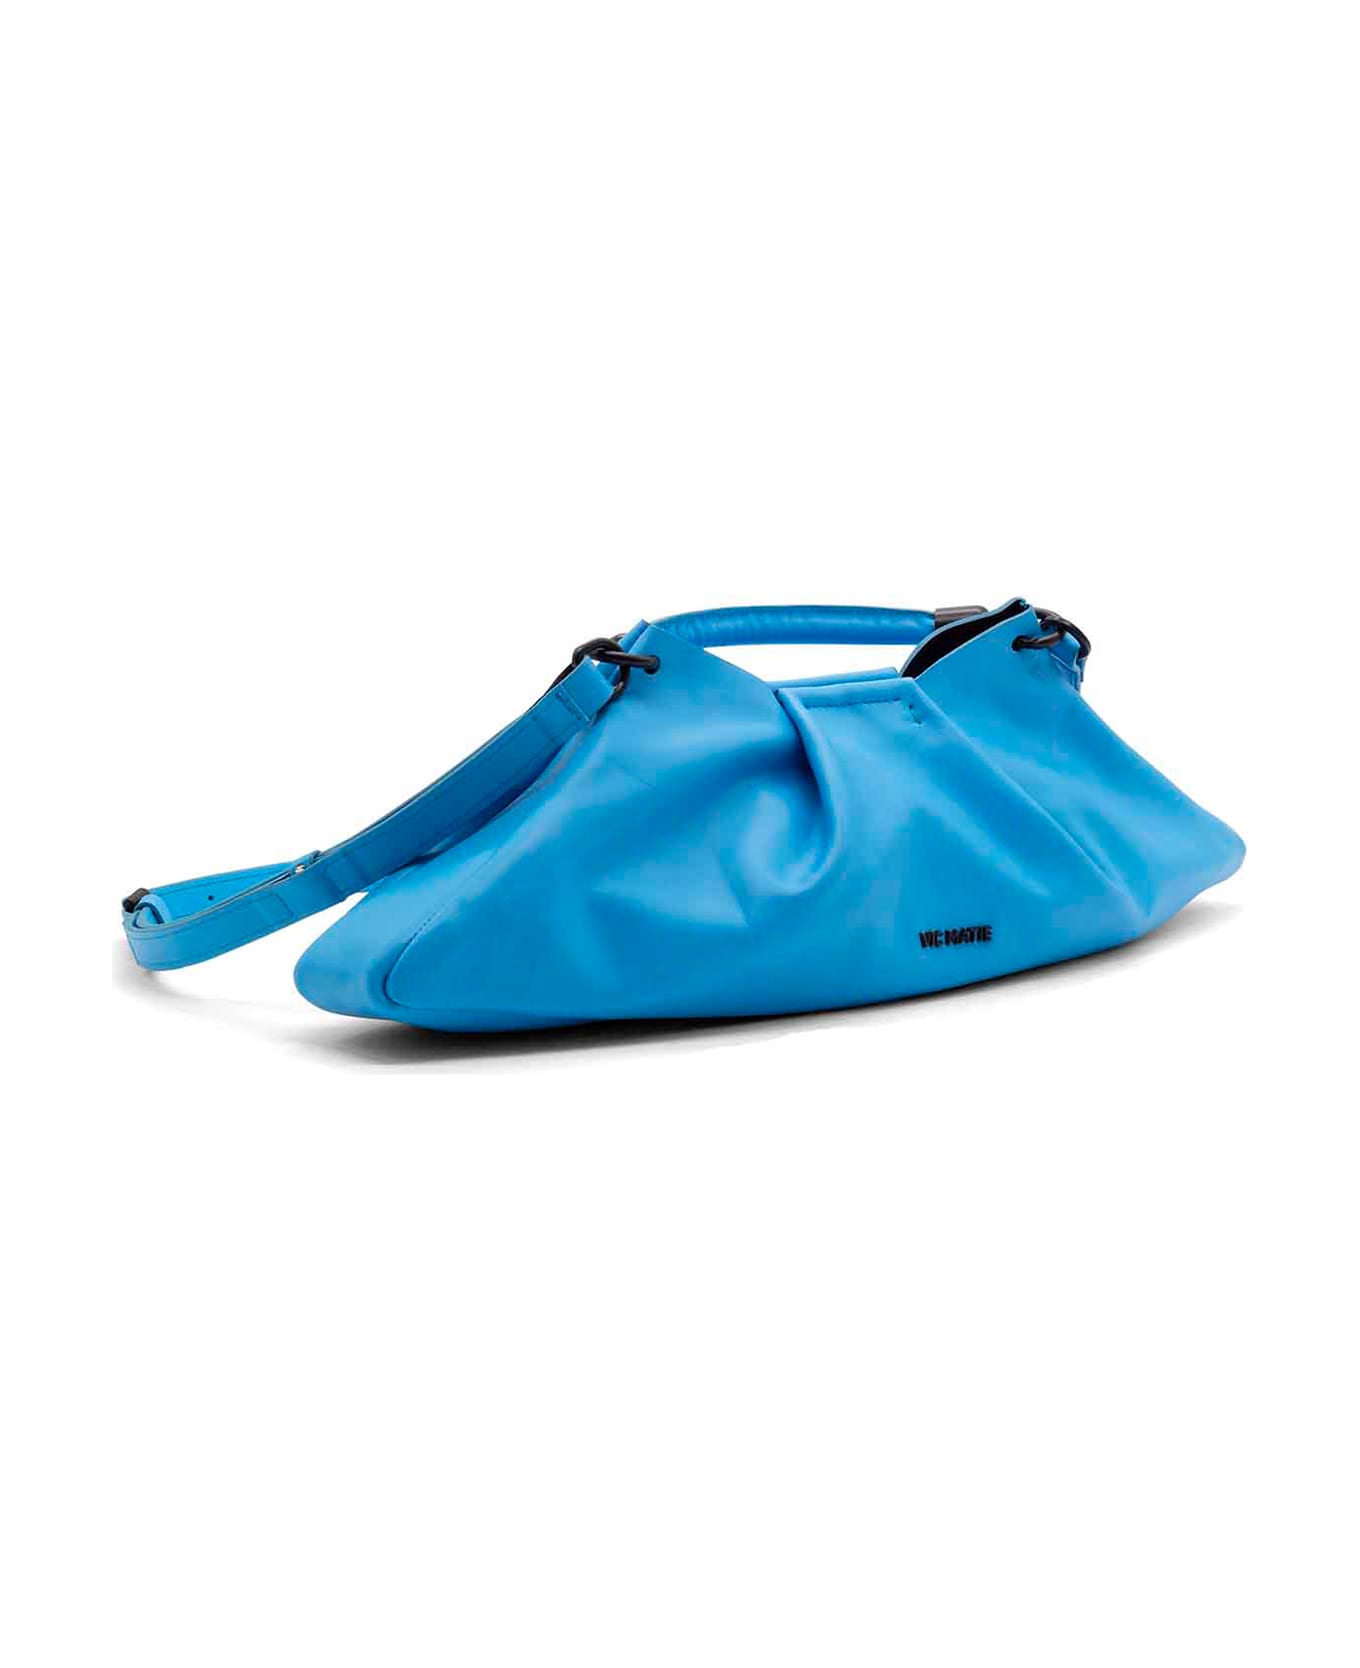 Vic Matié Light Blue Leather Clutch Bag With Shoulder Strap - SEA BLUE トートバッグ